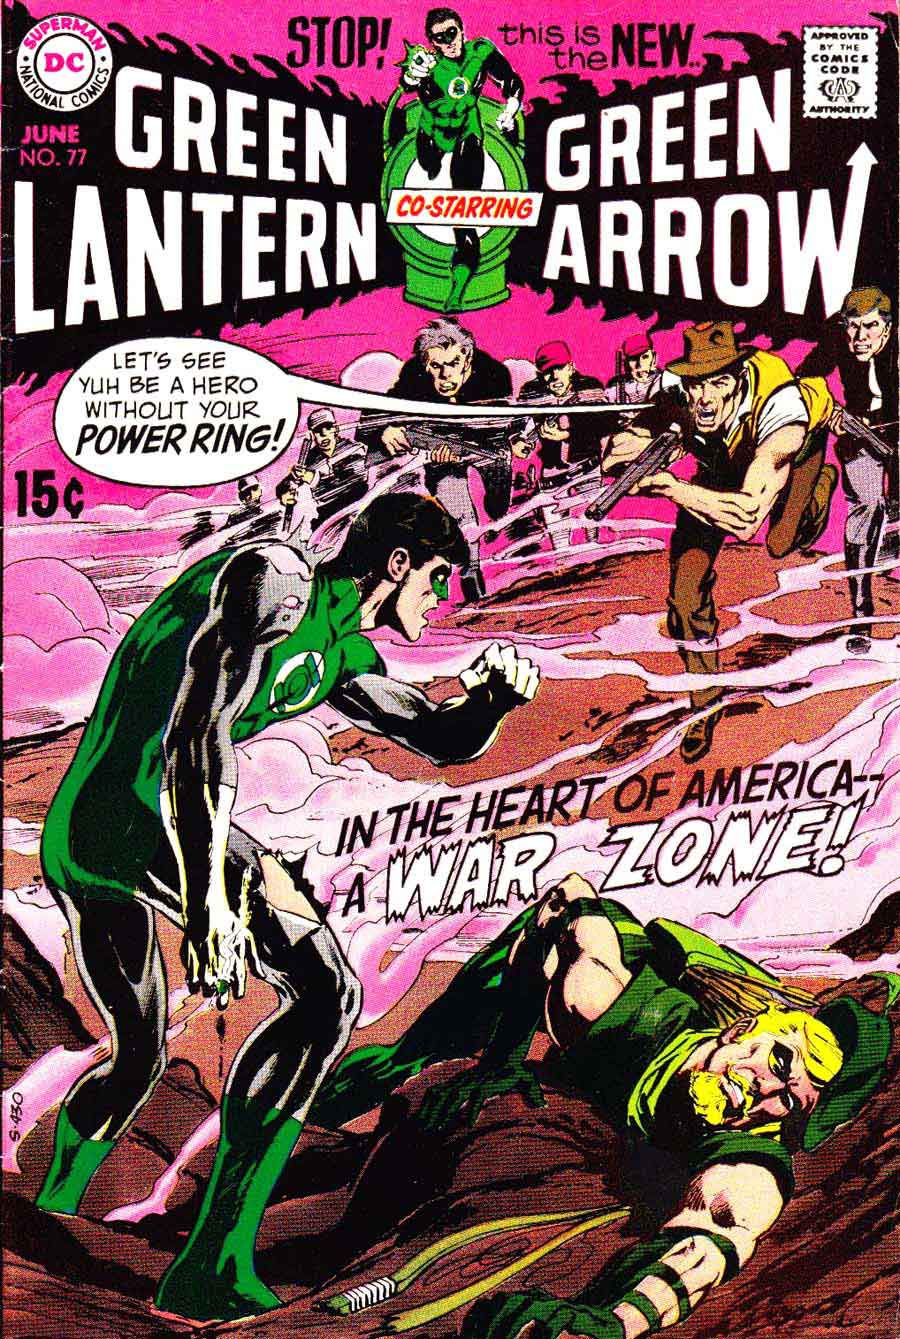 Green Lantern Green Arrow #77 bronze age 1970s dc comic book cover art by Neal Adams